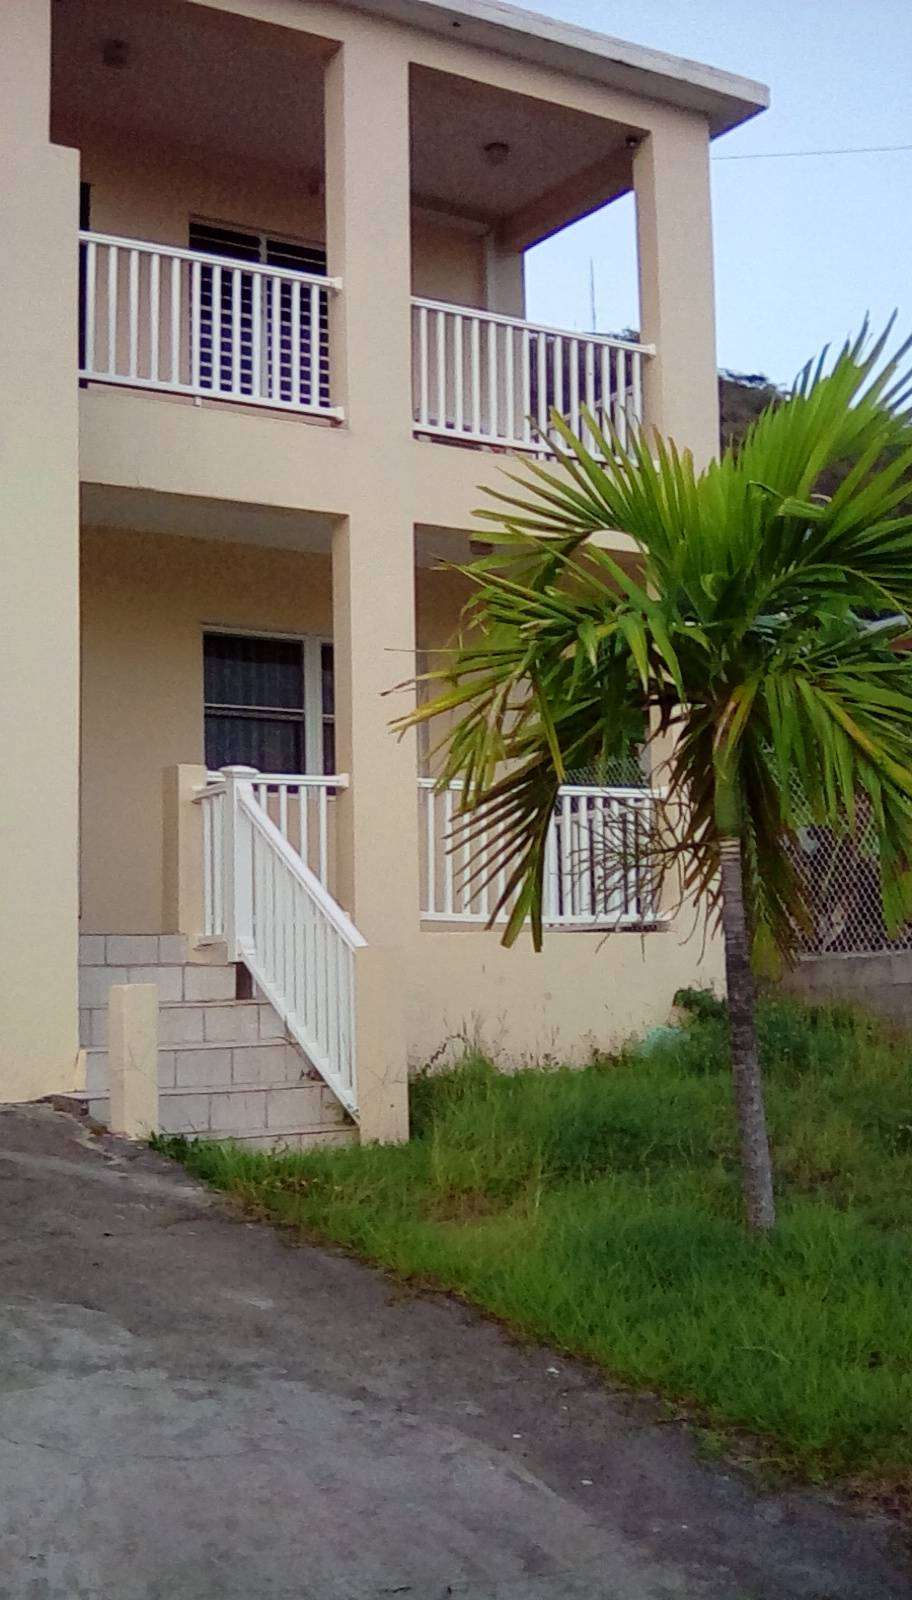 Apartment for rent in St Kitts, St Kitts long term rentals, St Kitts apartment for rent, St Kitts Student Housing, St Kitts Housing, St Kitts Real Estate Rentals, St Kitts Properties for rent